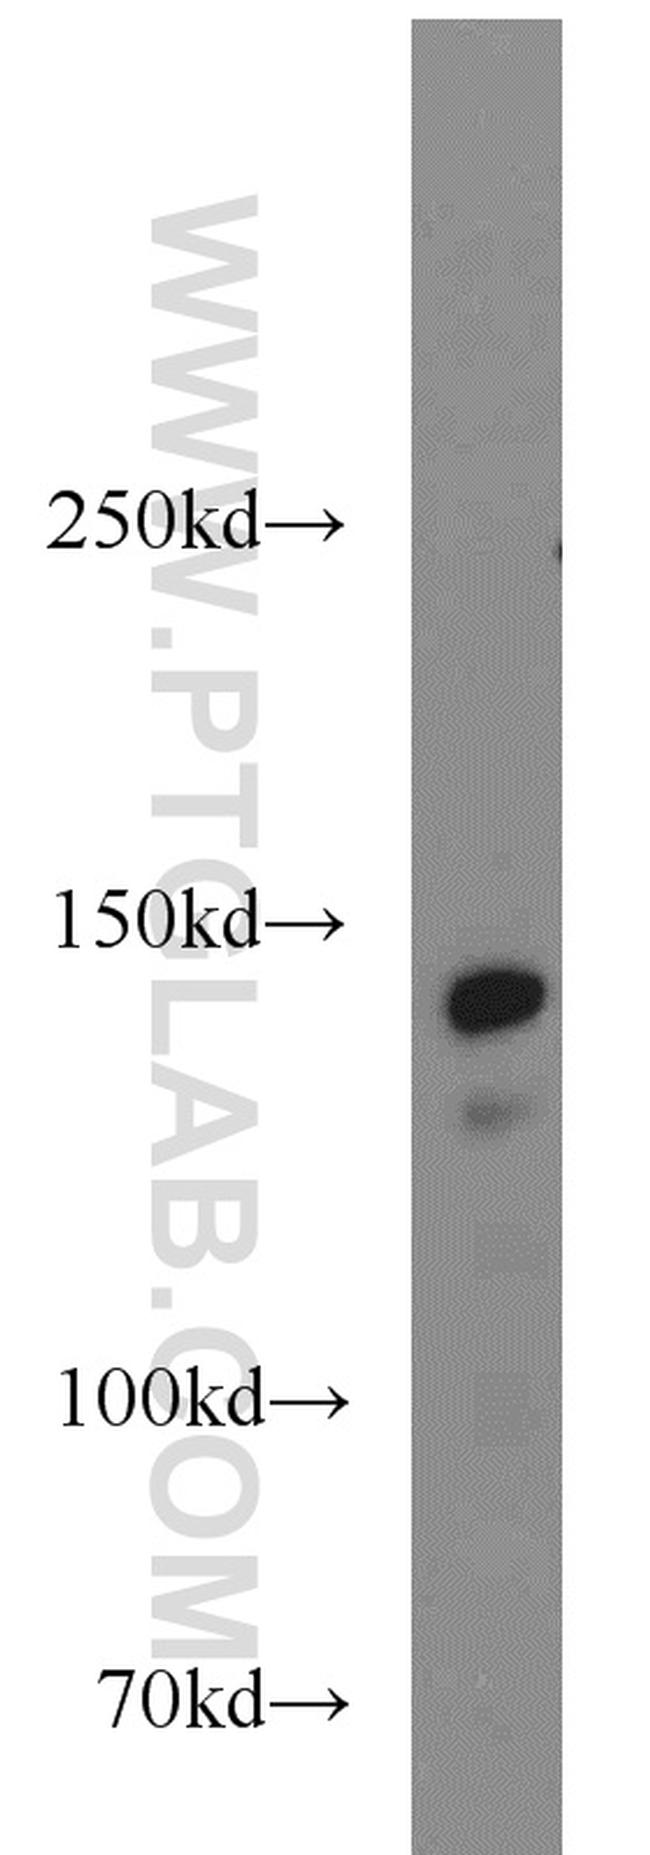 SMC1A Antibody in Western Blot (WB)